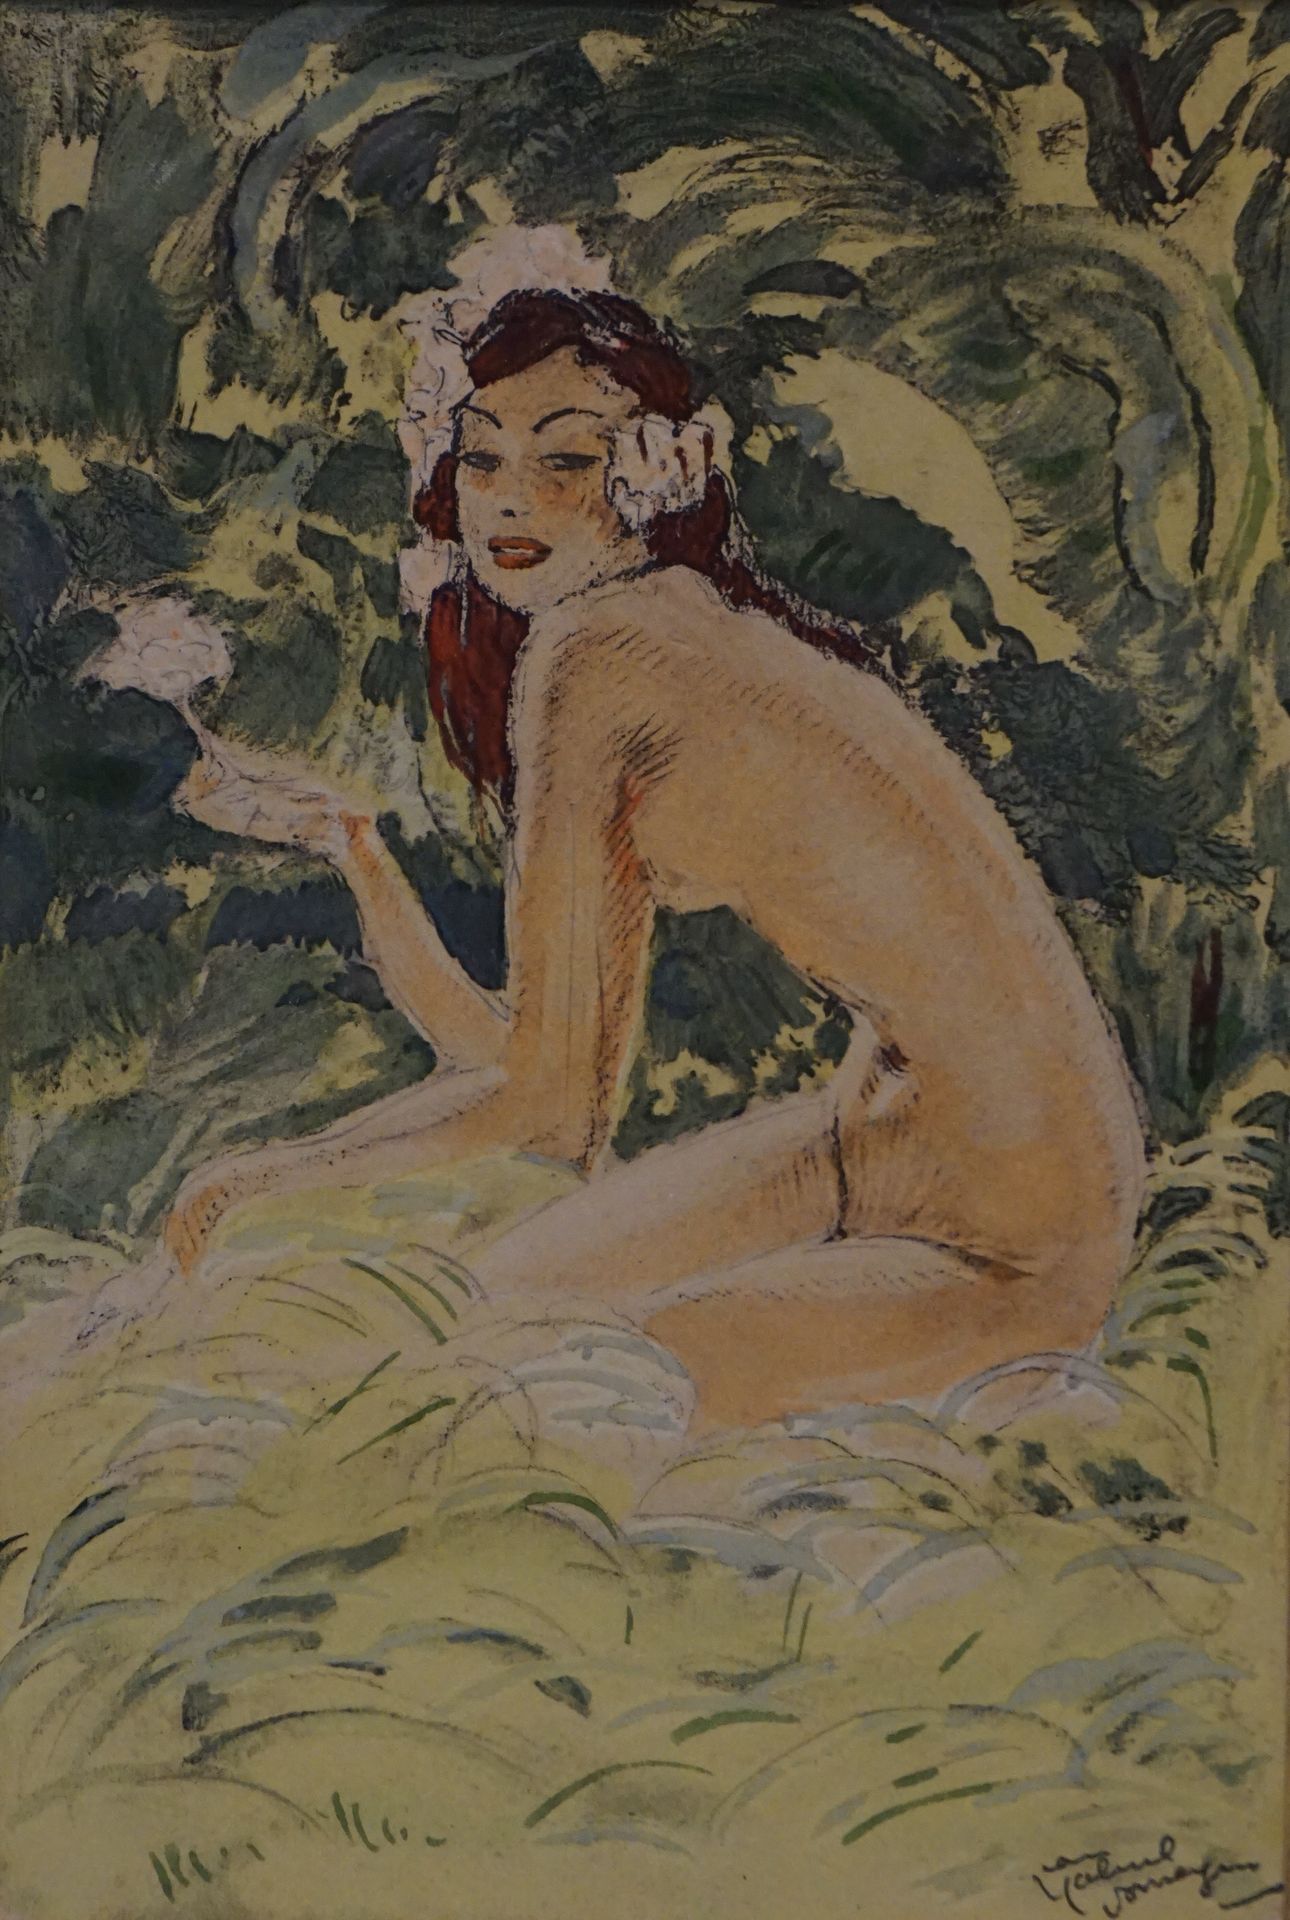 Jean-Gabriel DOMERGUE (1889-1962) "裸体坐着的女人"，水彩画，约15.5x10.5厘米